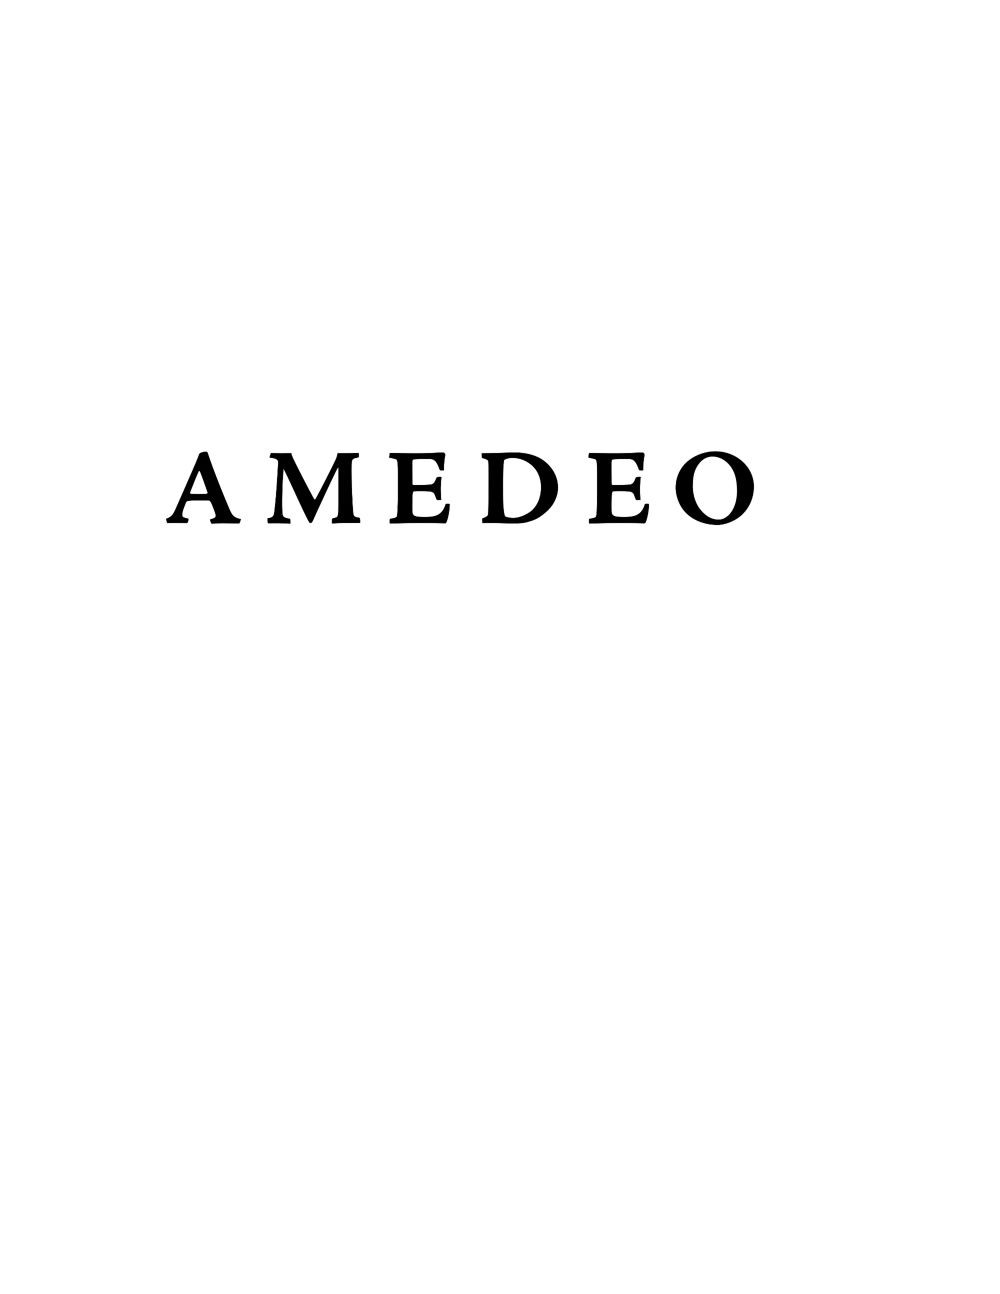 AMEDEO Logo - Copia3 - Amedeo Scognamiglio.jpg